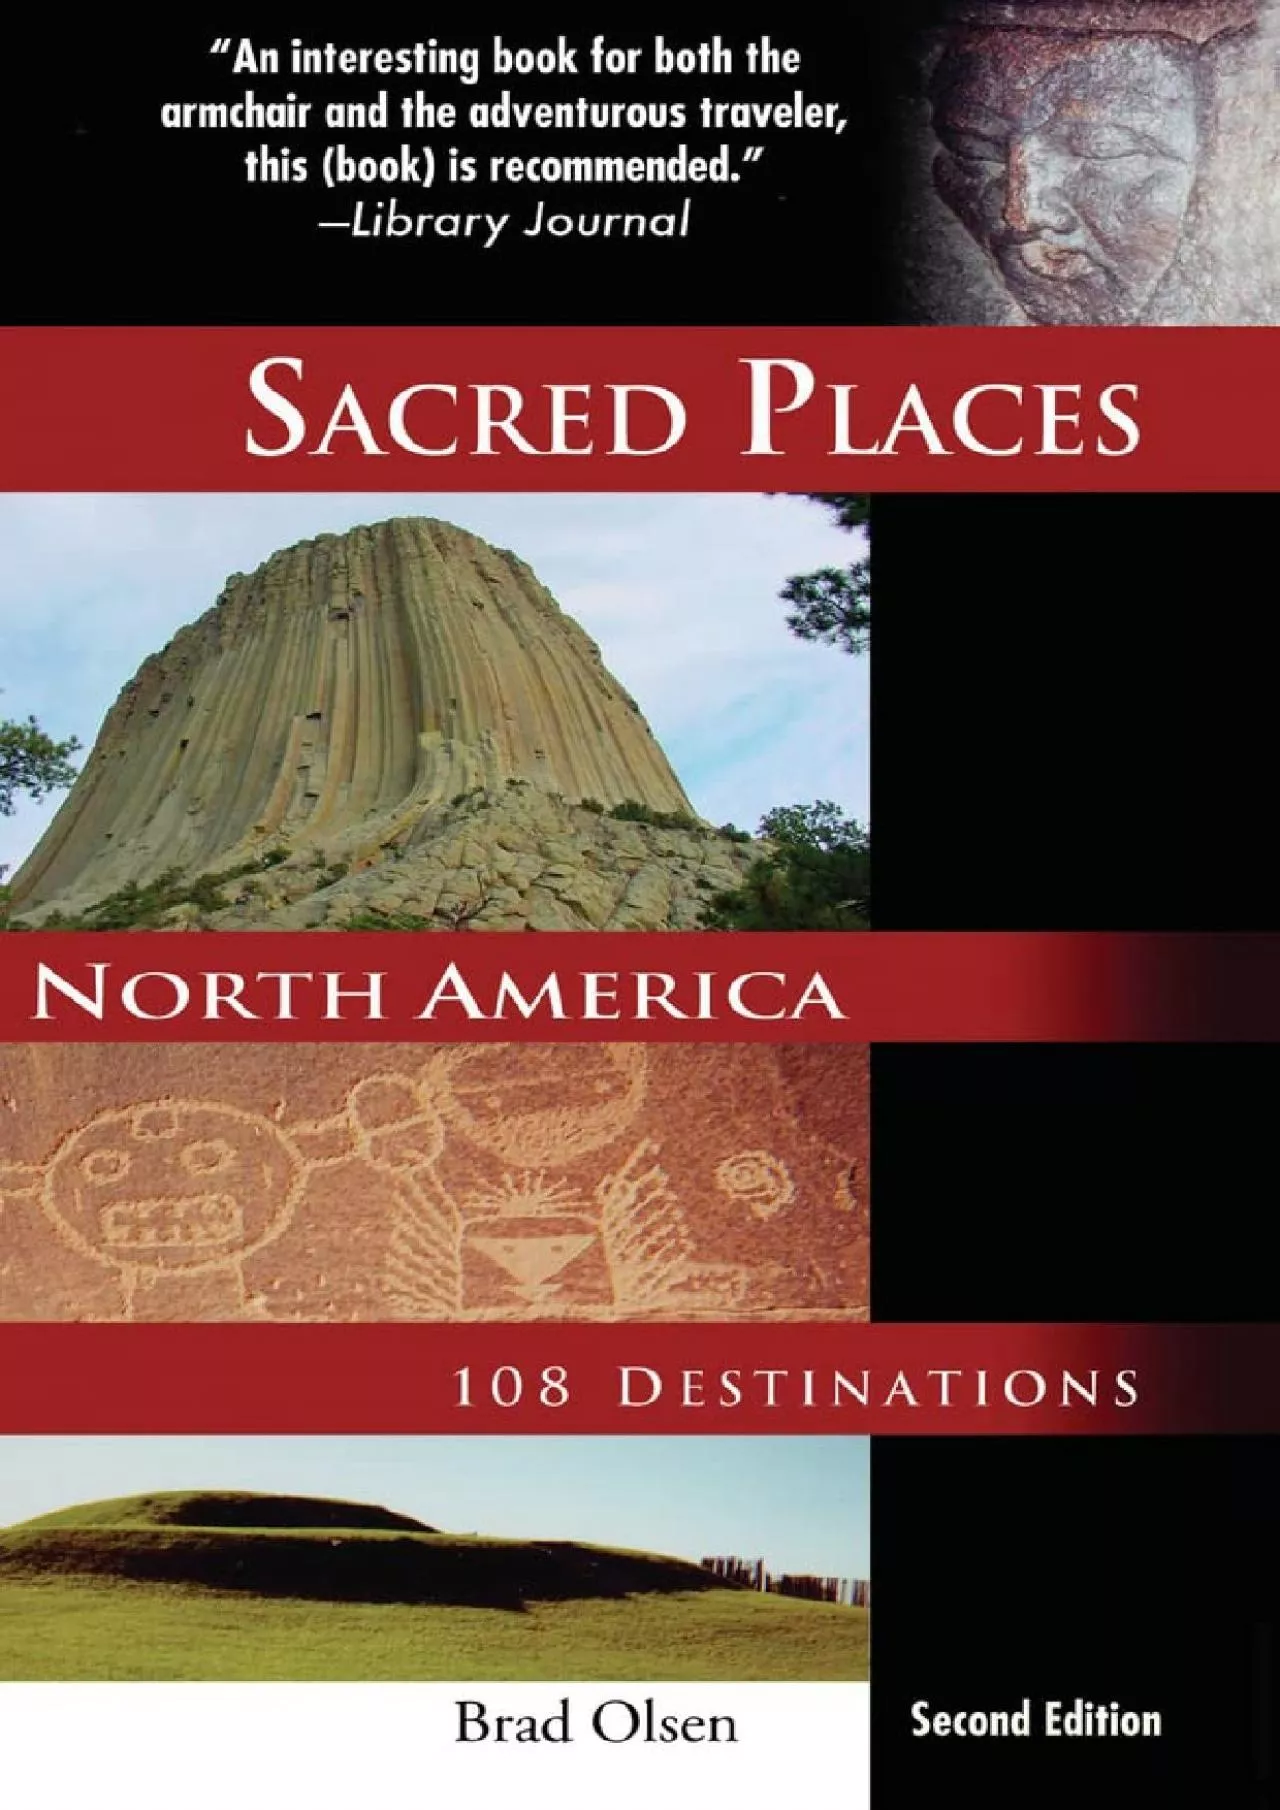 [EBOOK]-Sacred Places North America: 108 Destinations (Sacred Places: 108 Destinations